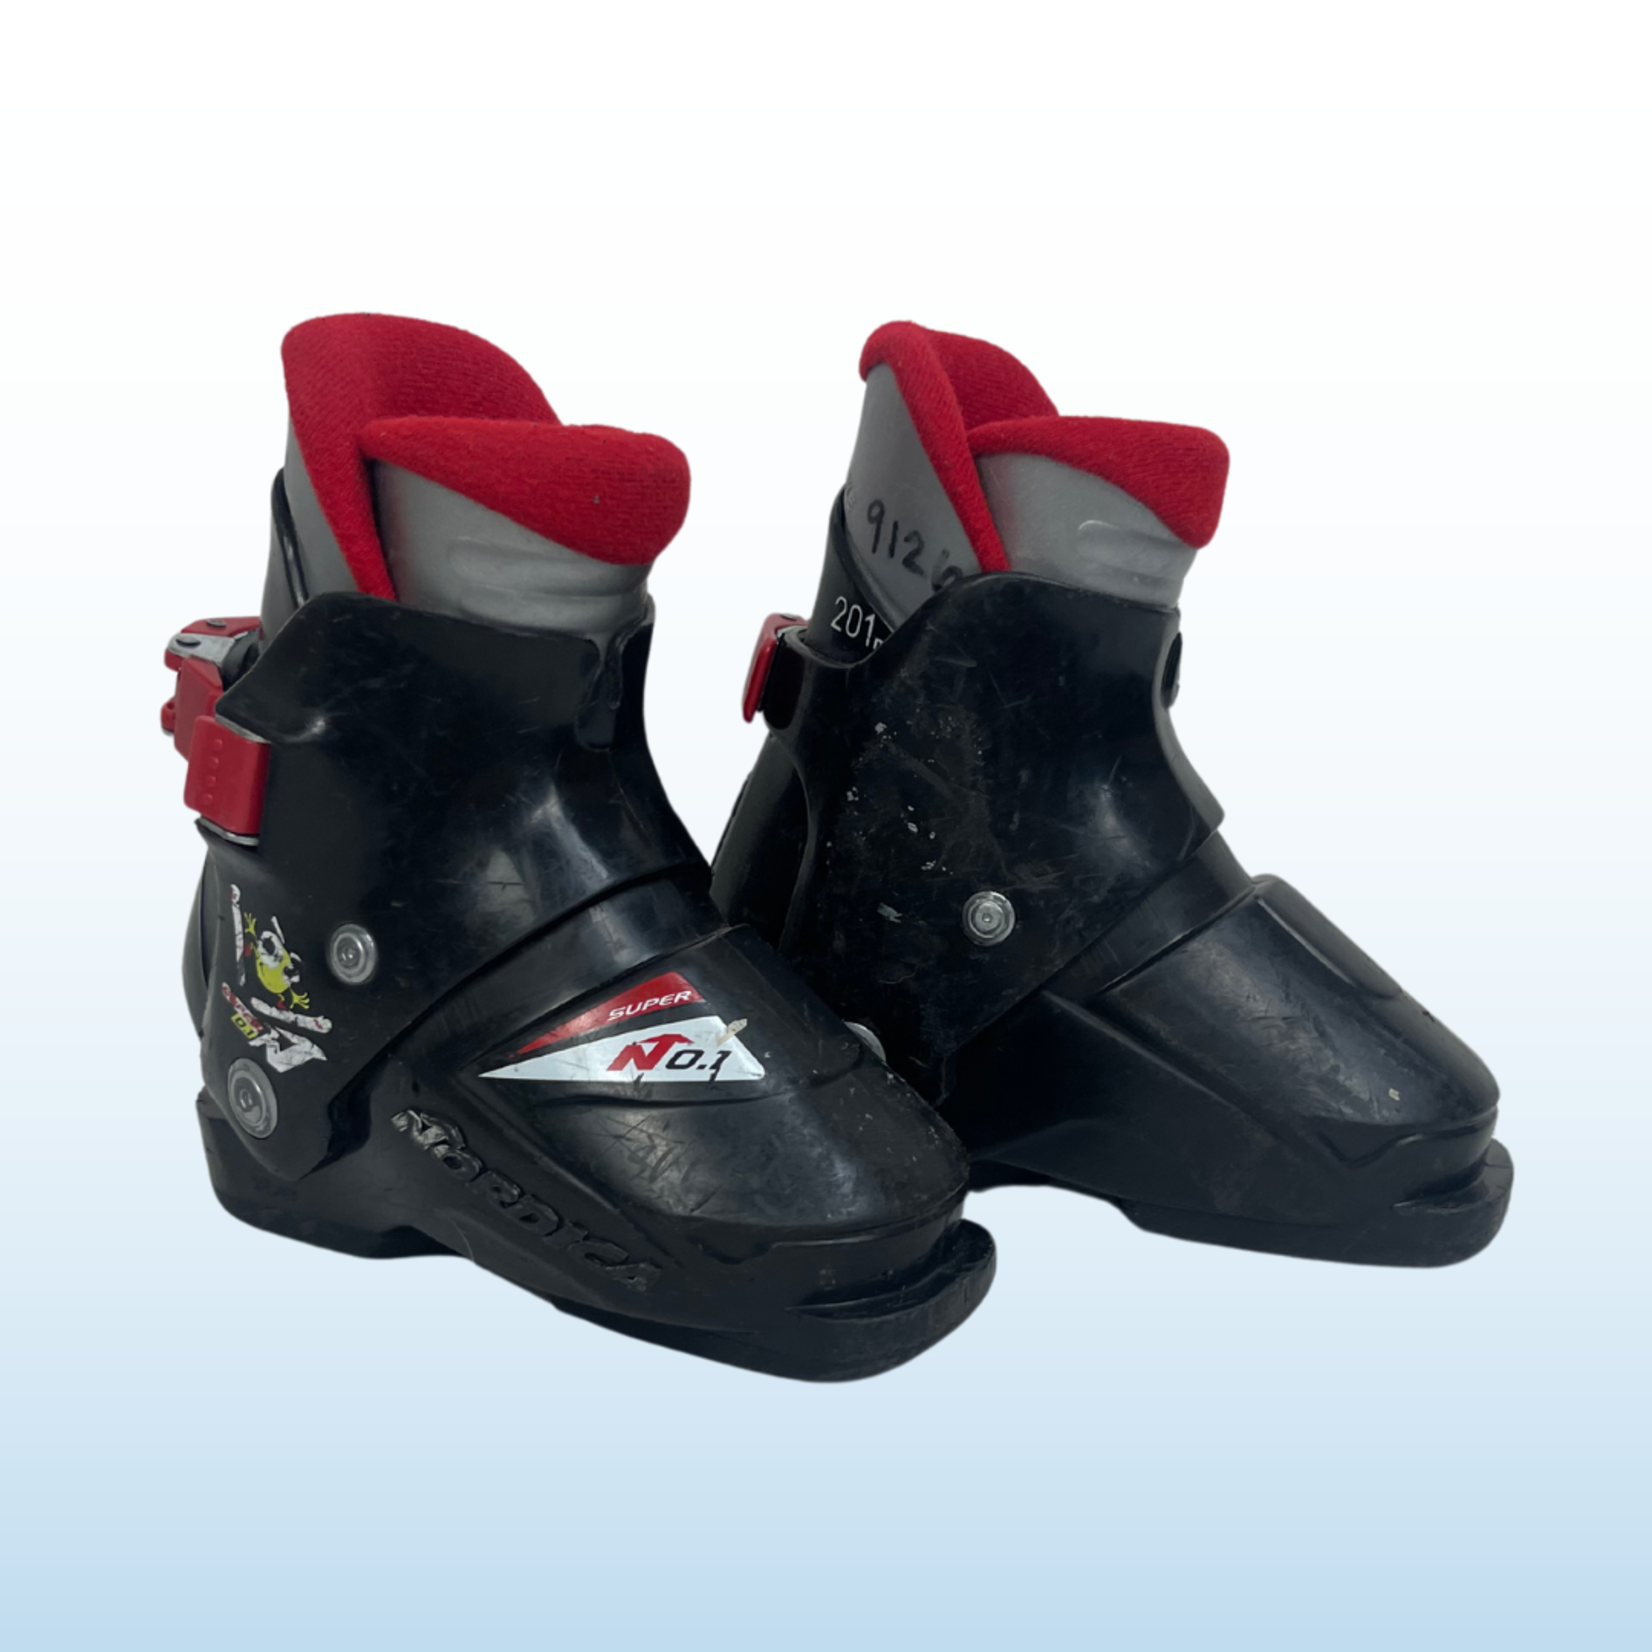 Nordica Nordica Super N 0.1 Kids Ski Boots